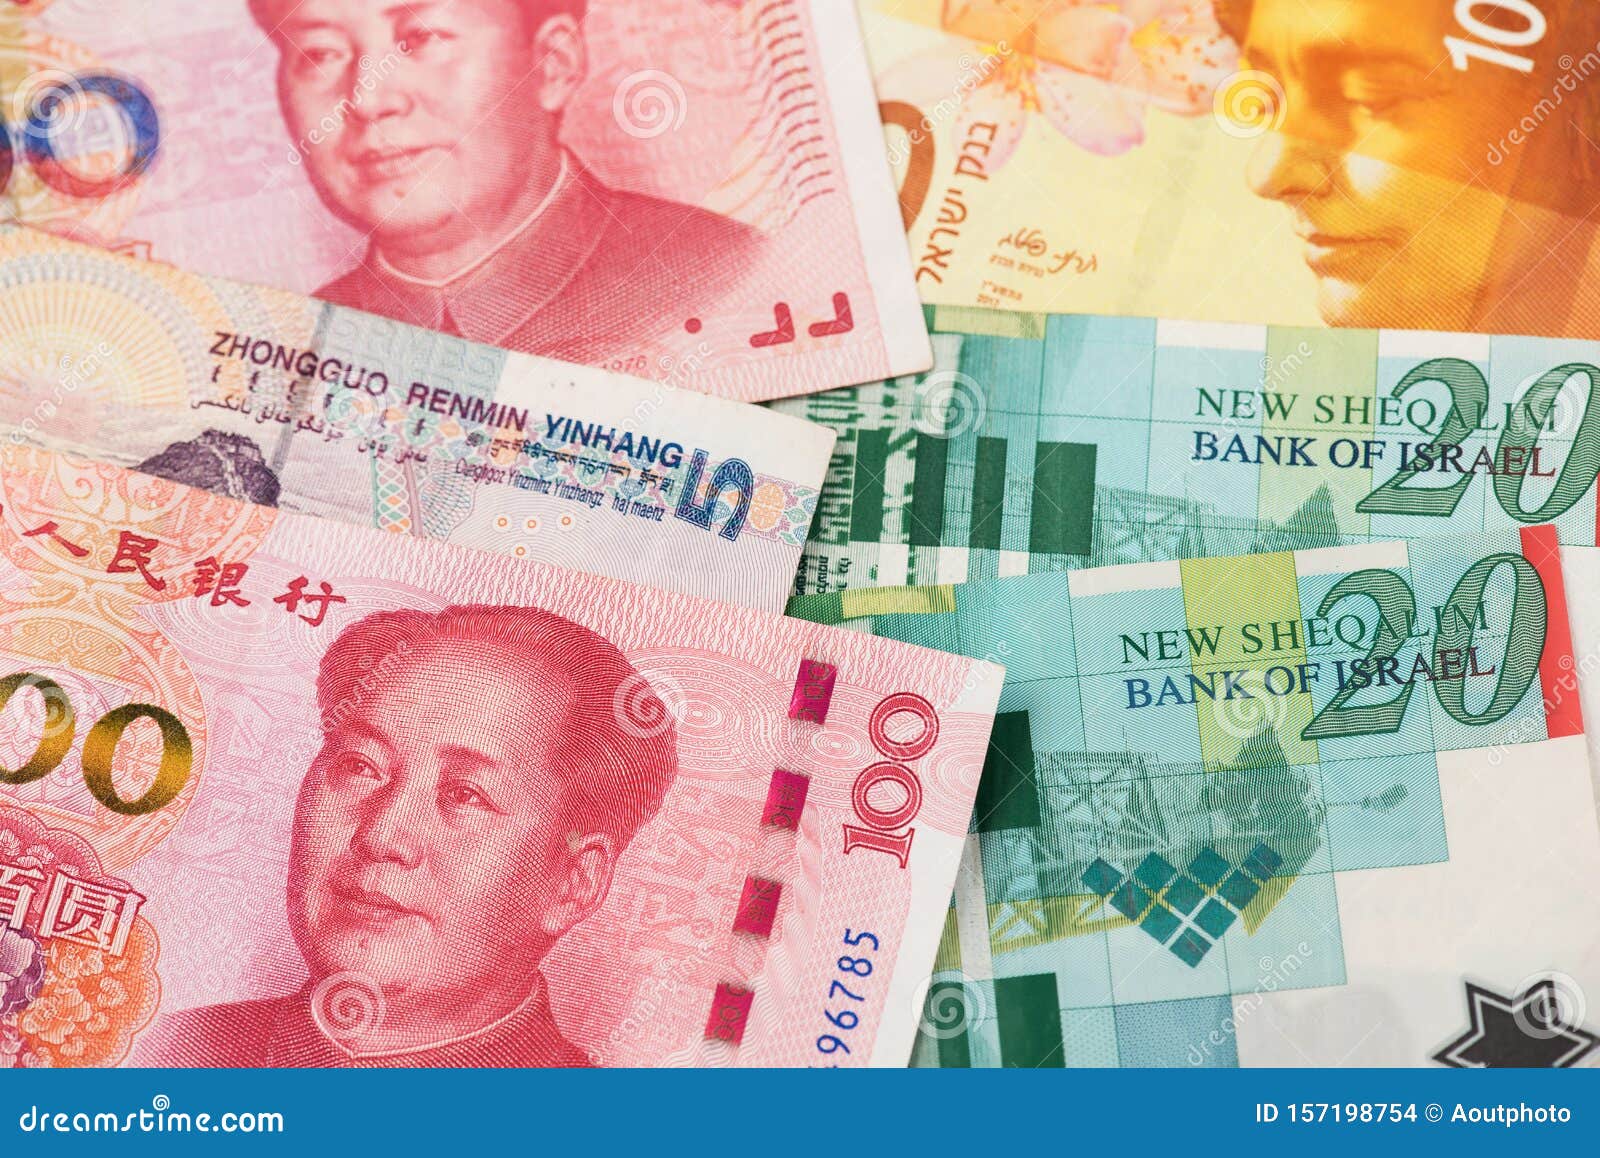 Rmb to rub. Китайские юани код валюты. Шекель и юани. Шекель к доллару. 100 Шекелей в юанях.